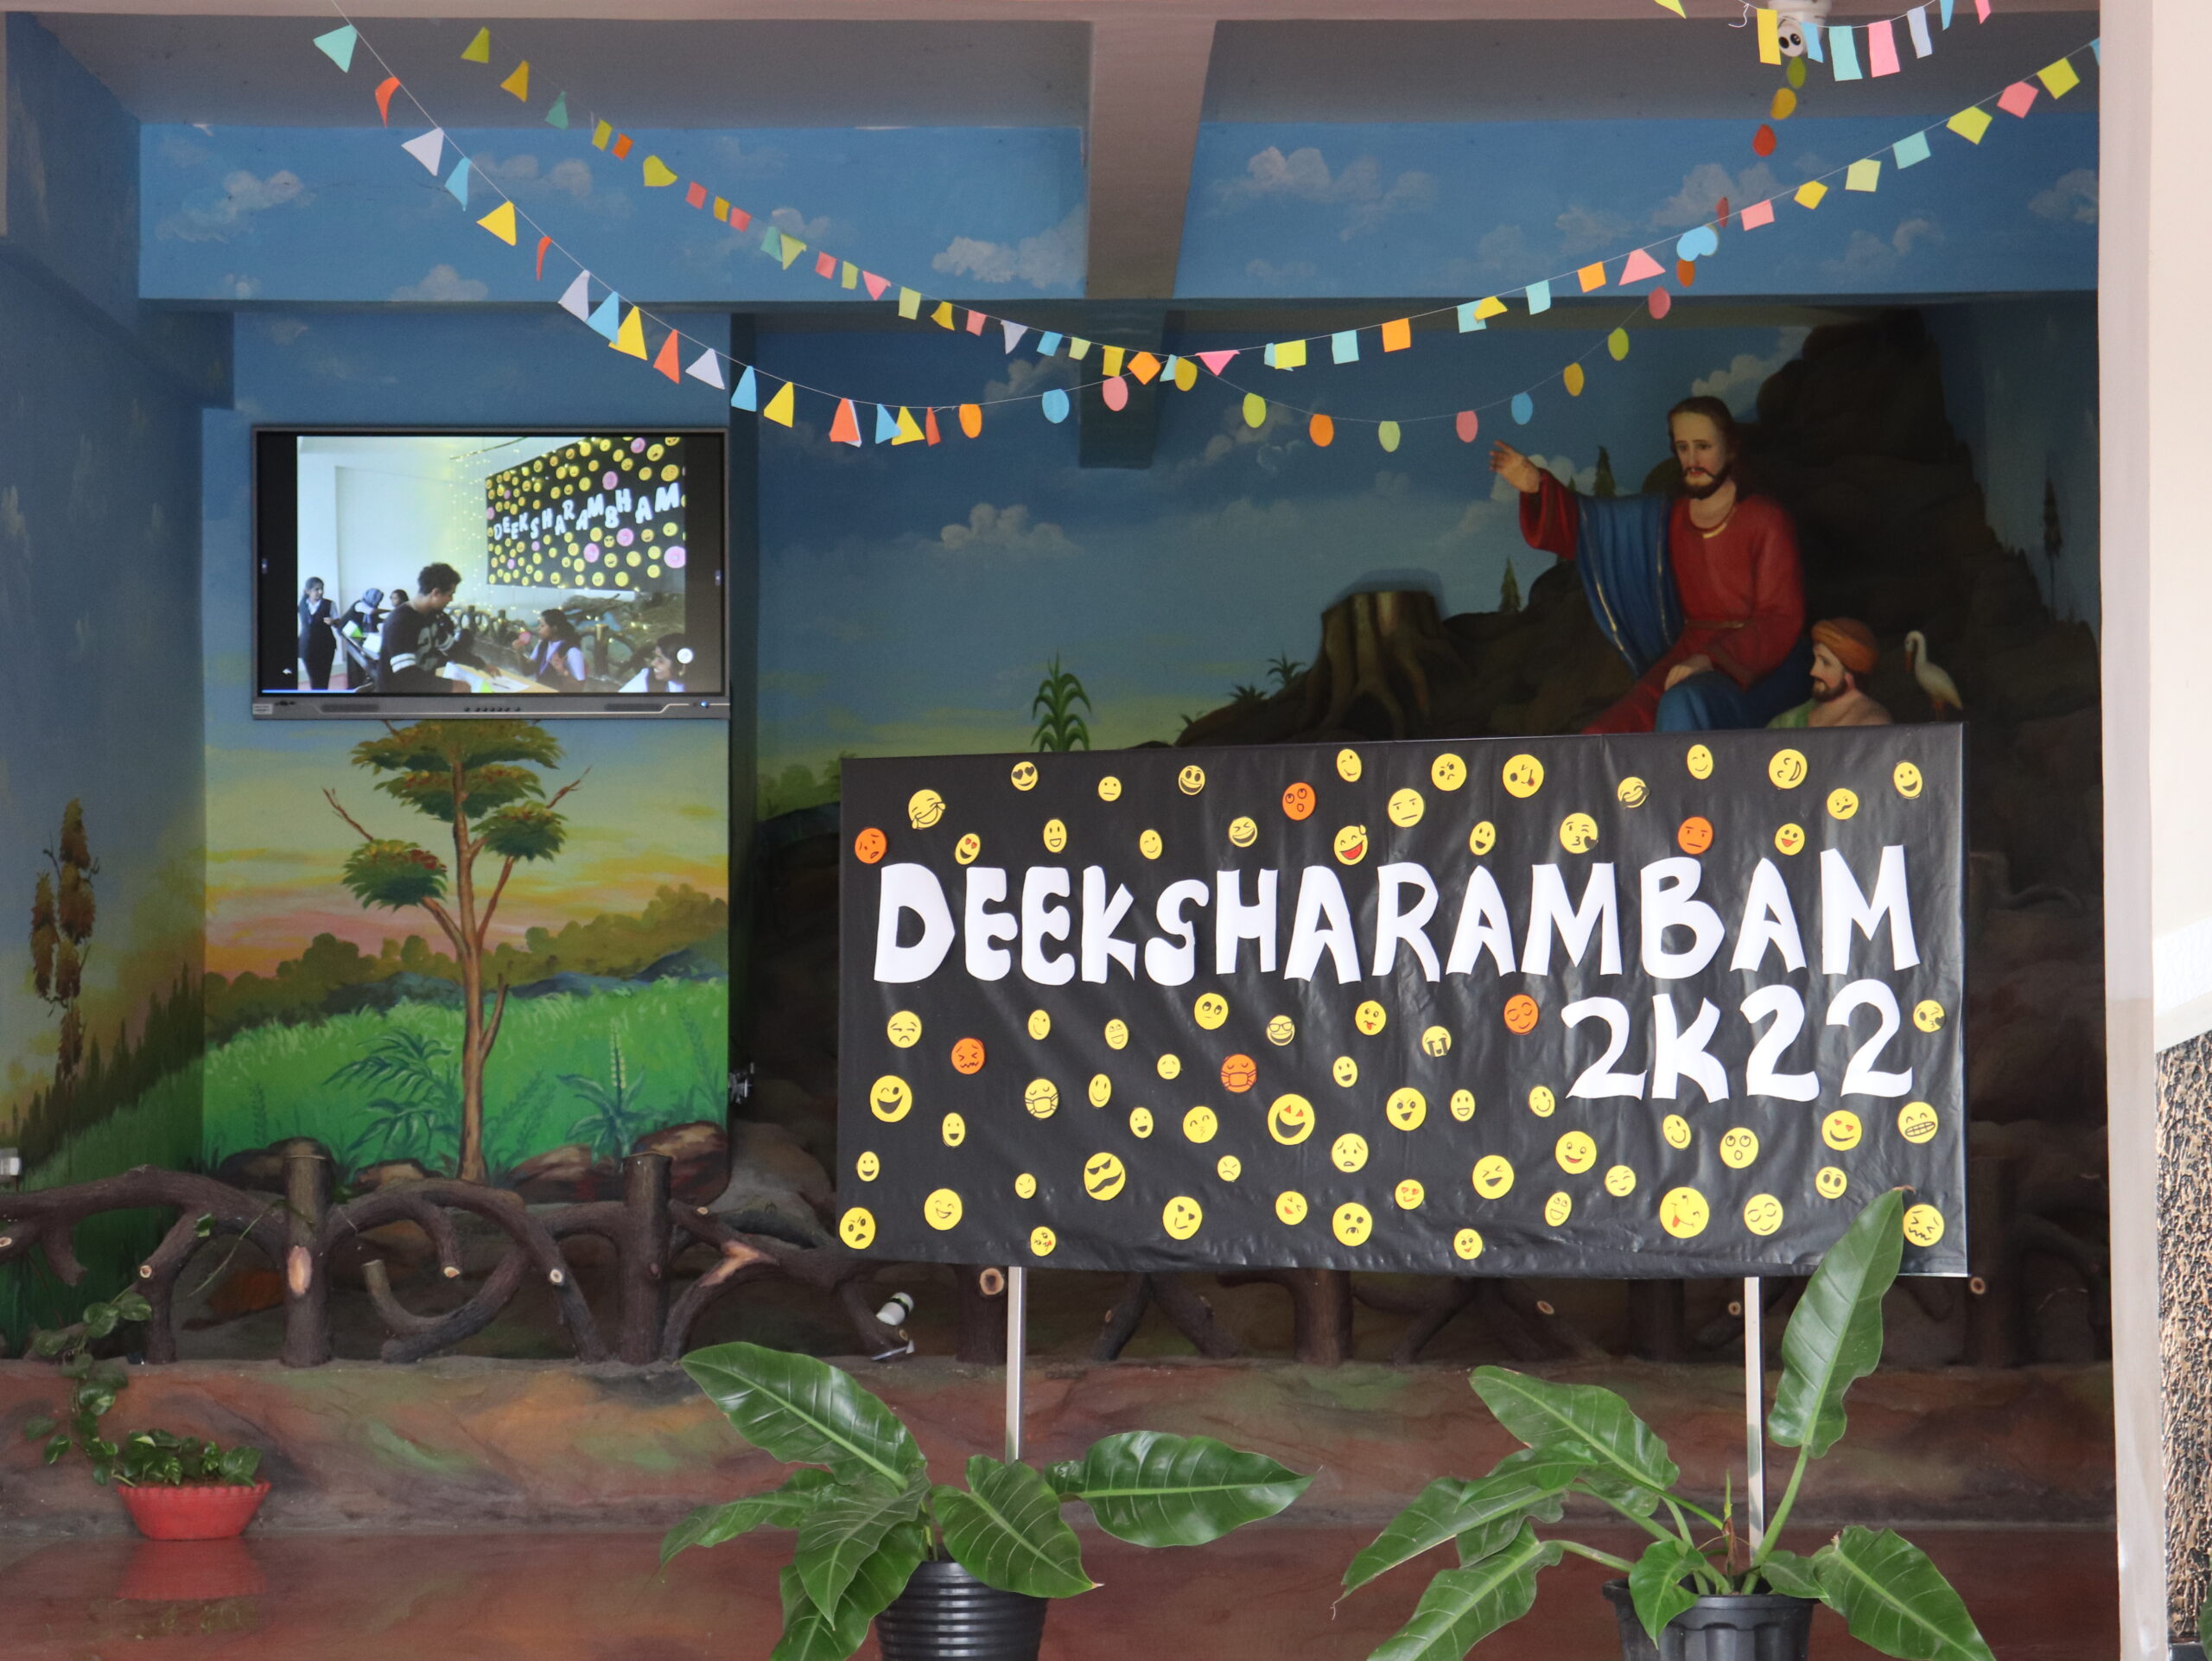 Deeksharambham – 2k22